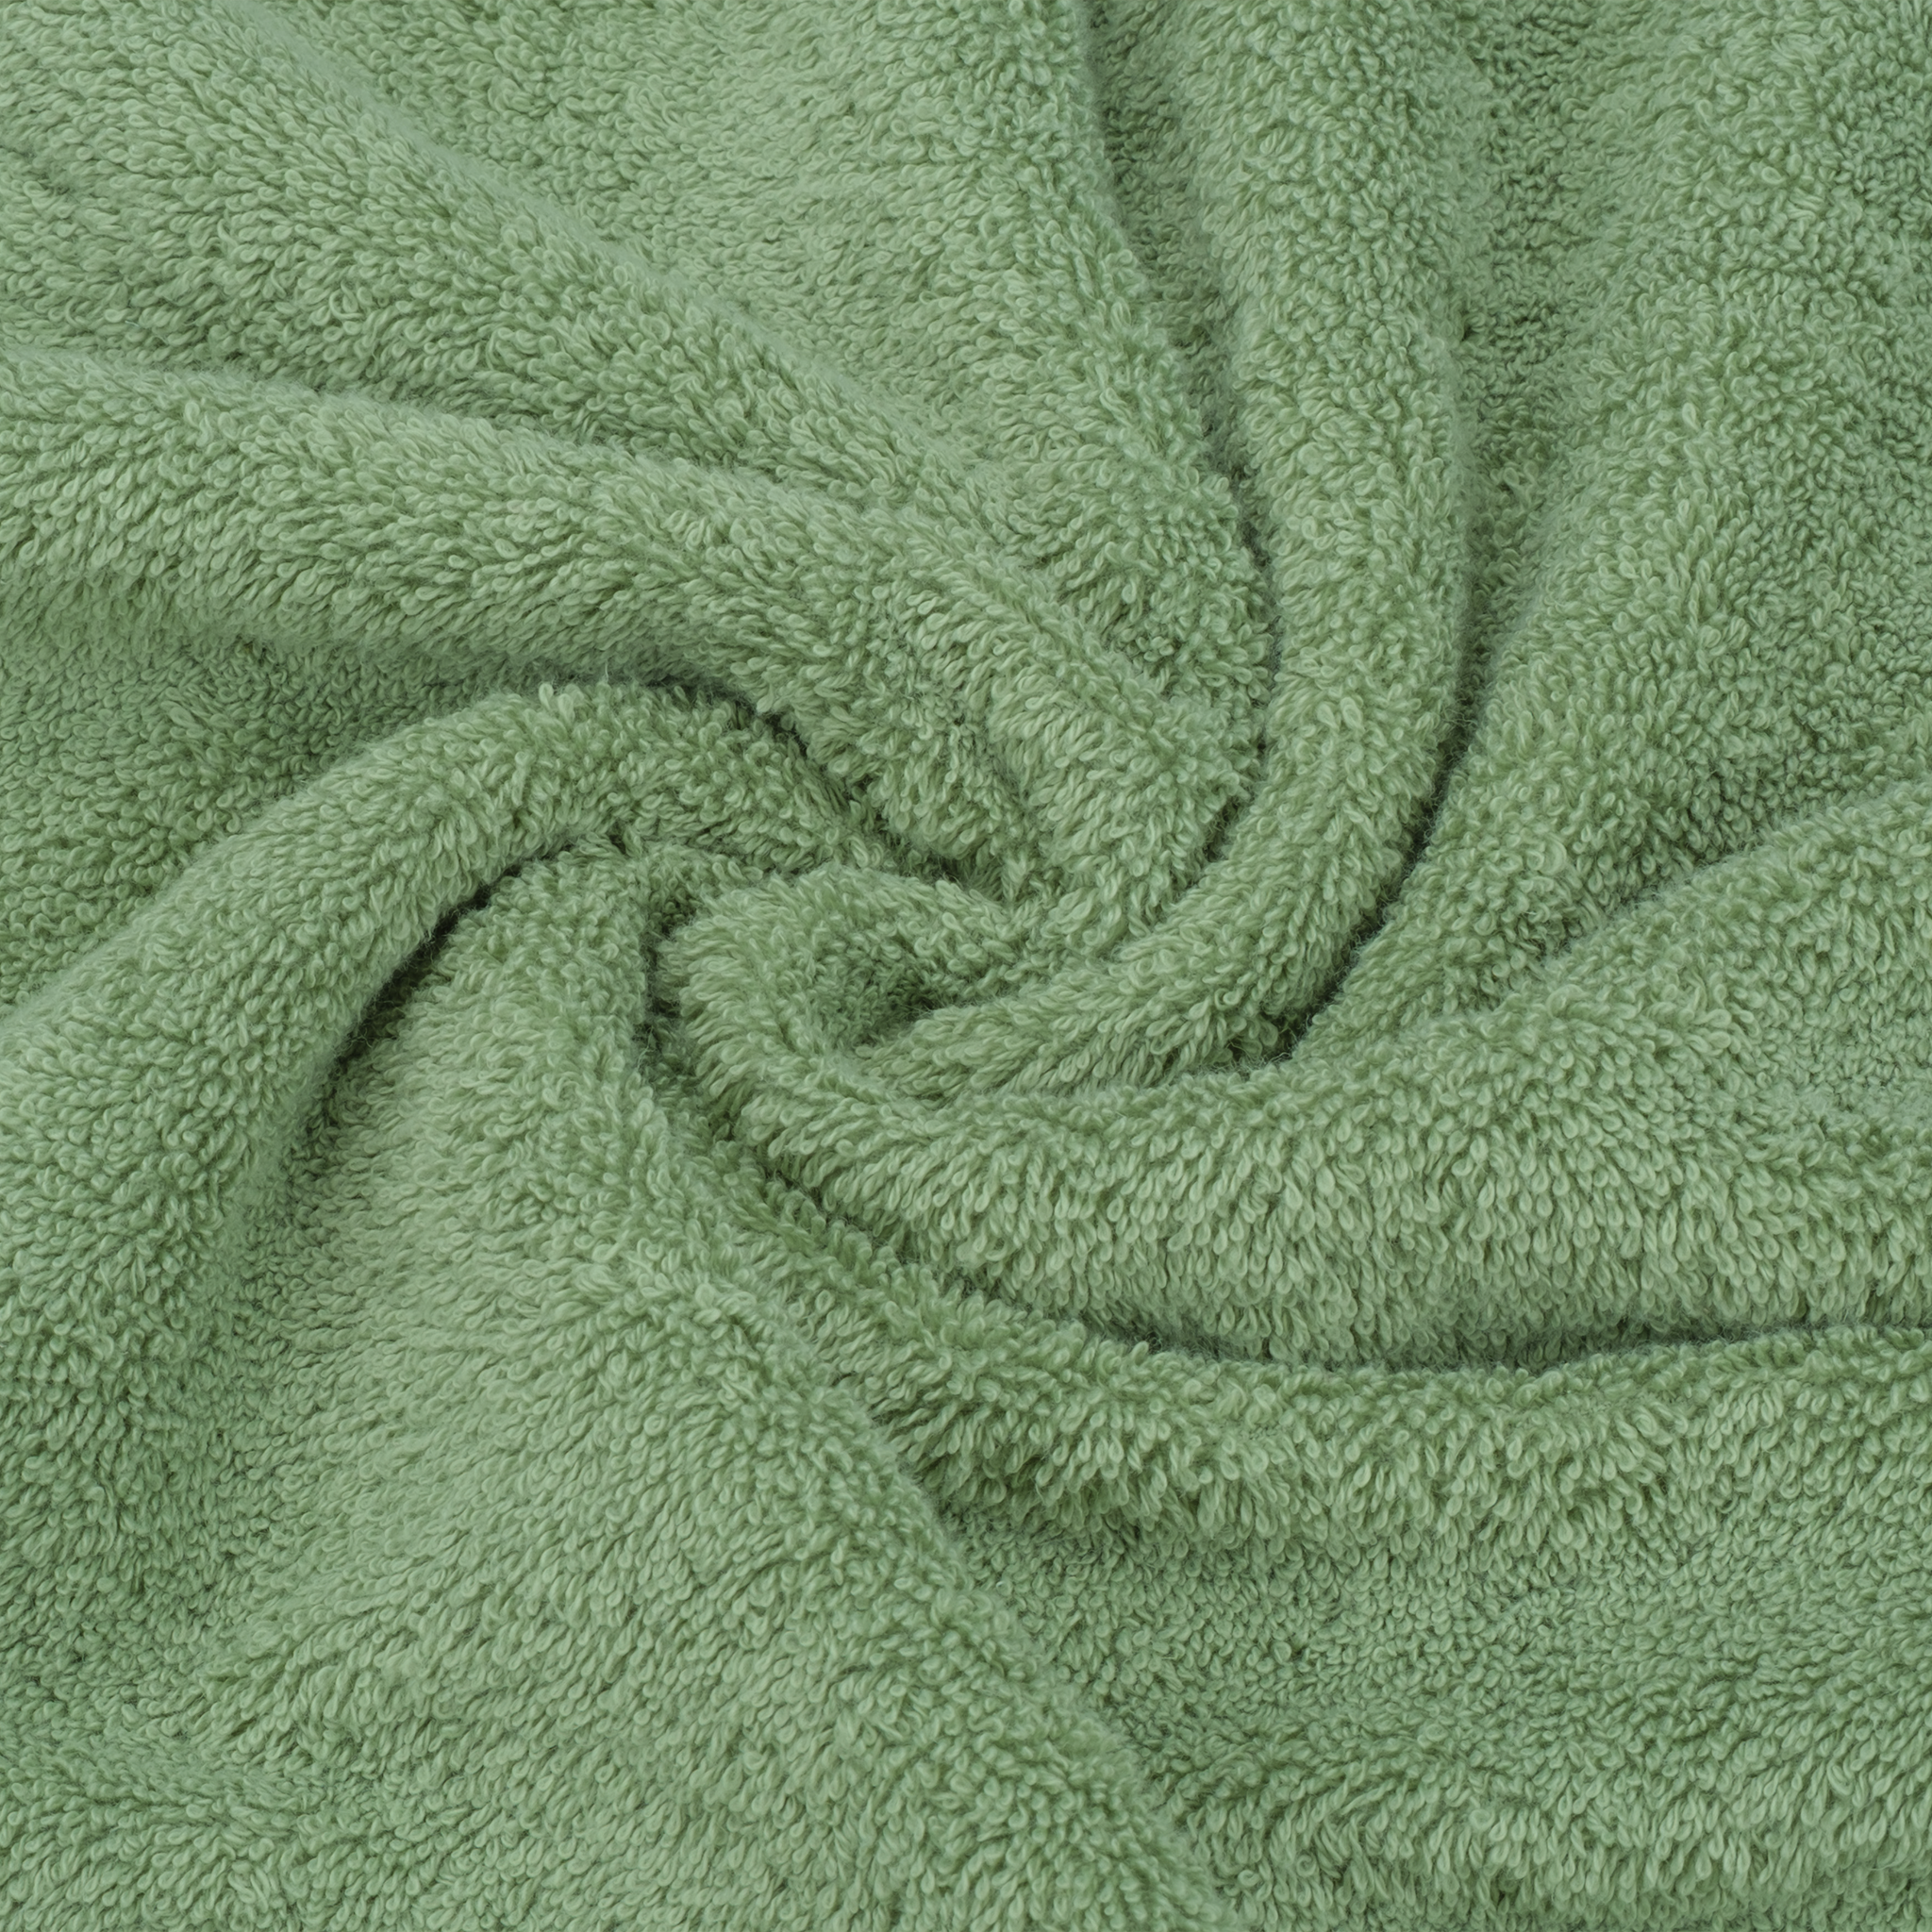 American Soft Linen - Single Piece Turkish Cotton Washcloth Towels - Sage-Green - 5